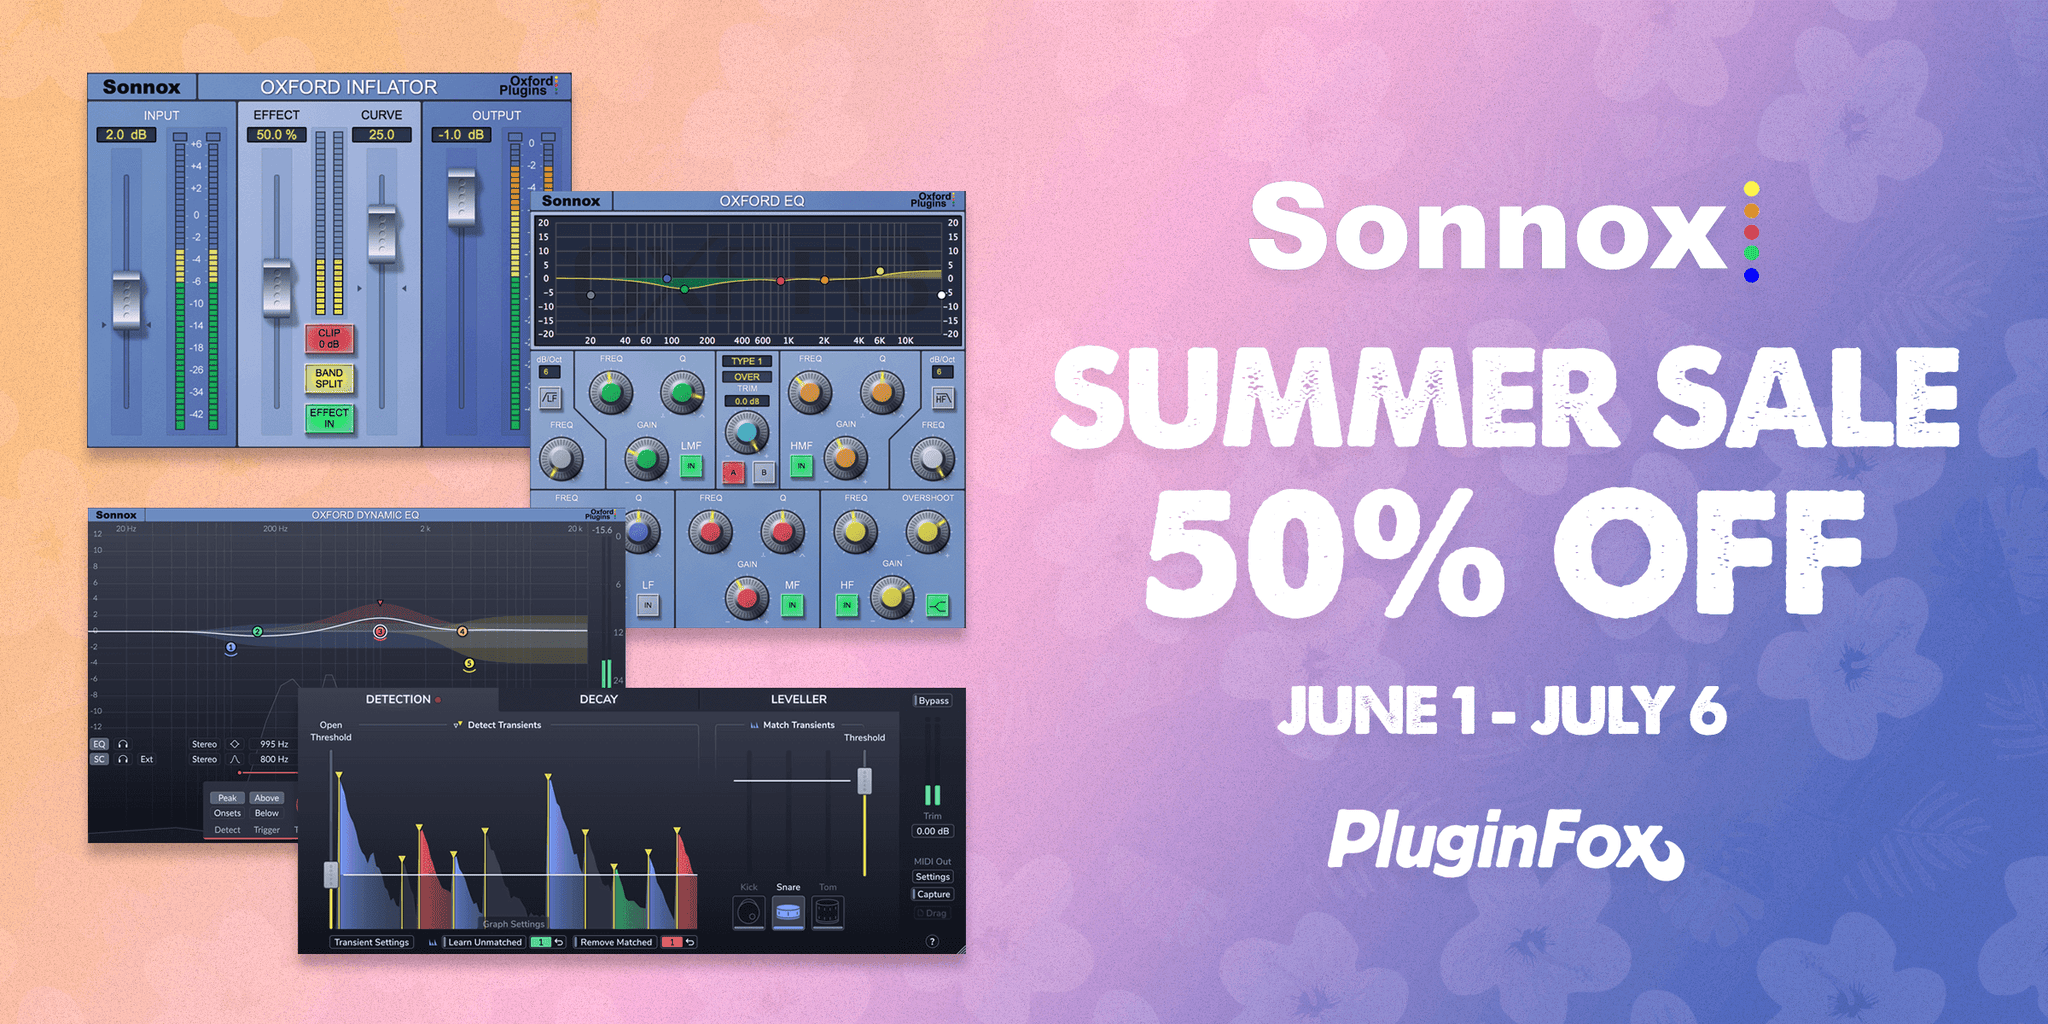 Sonnox Summer Sale June 1 - July 6